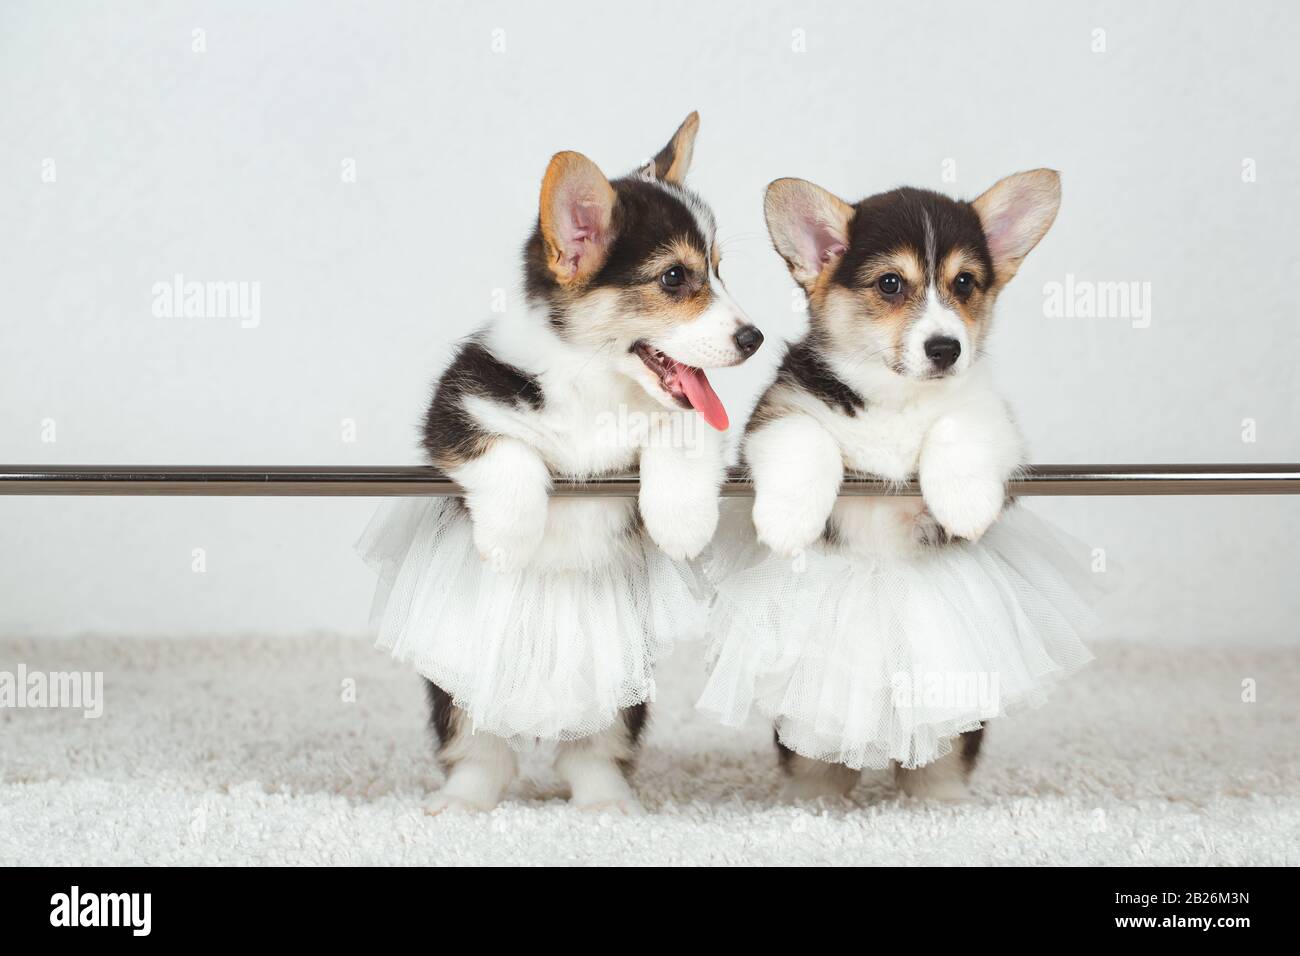 Corgi puppies at the ballet dancer Stock Photo